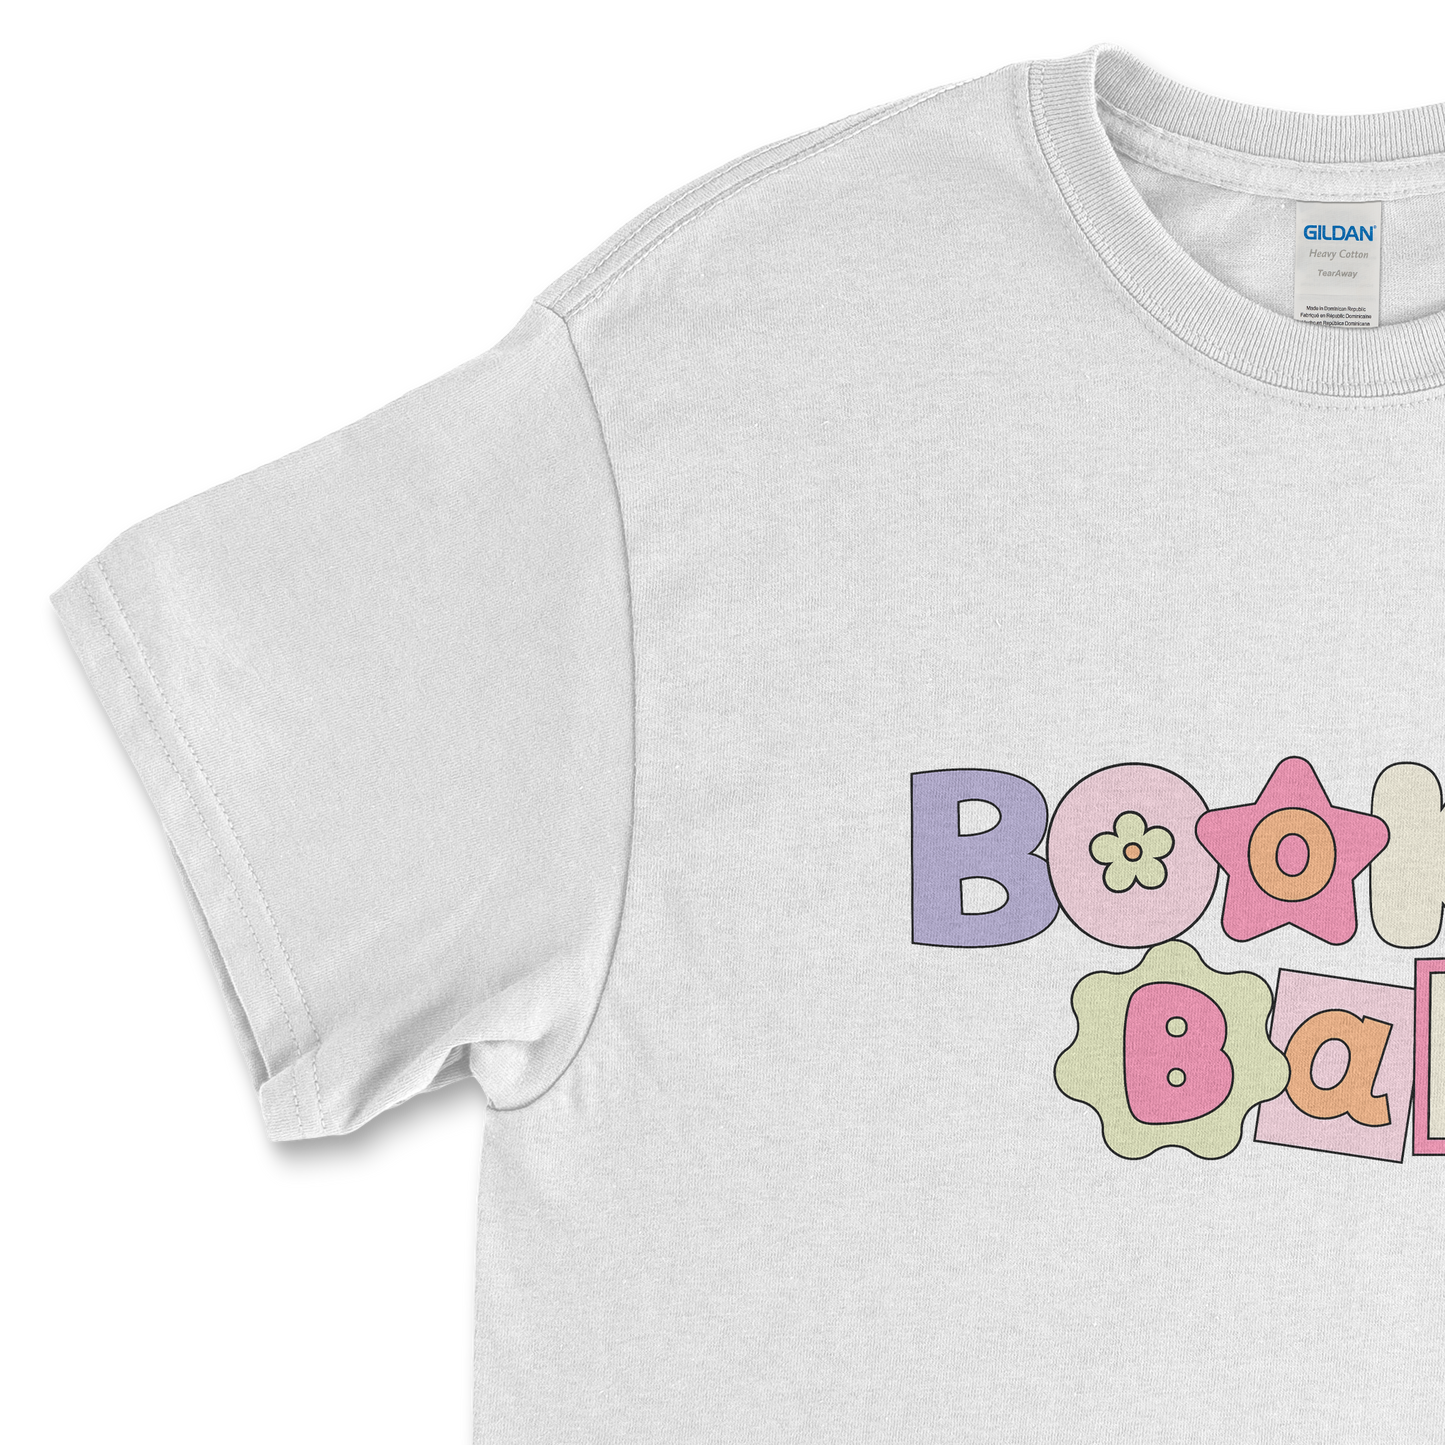 Bookish Babe T-Shirt